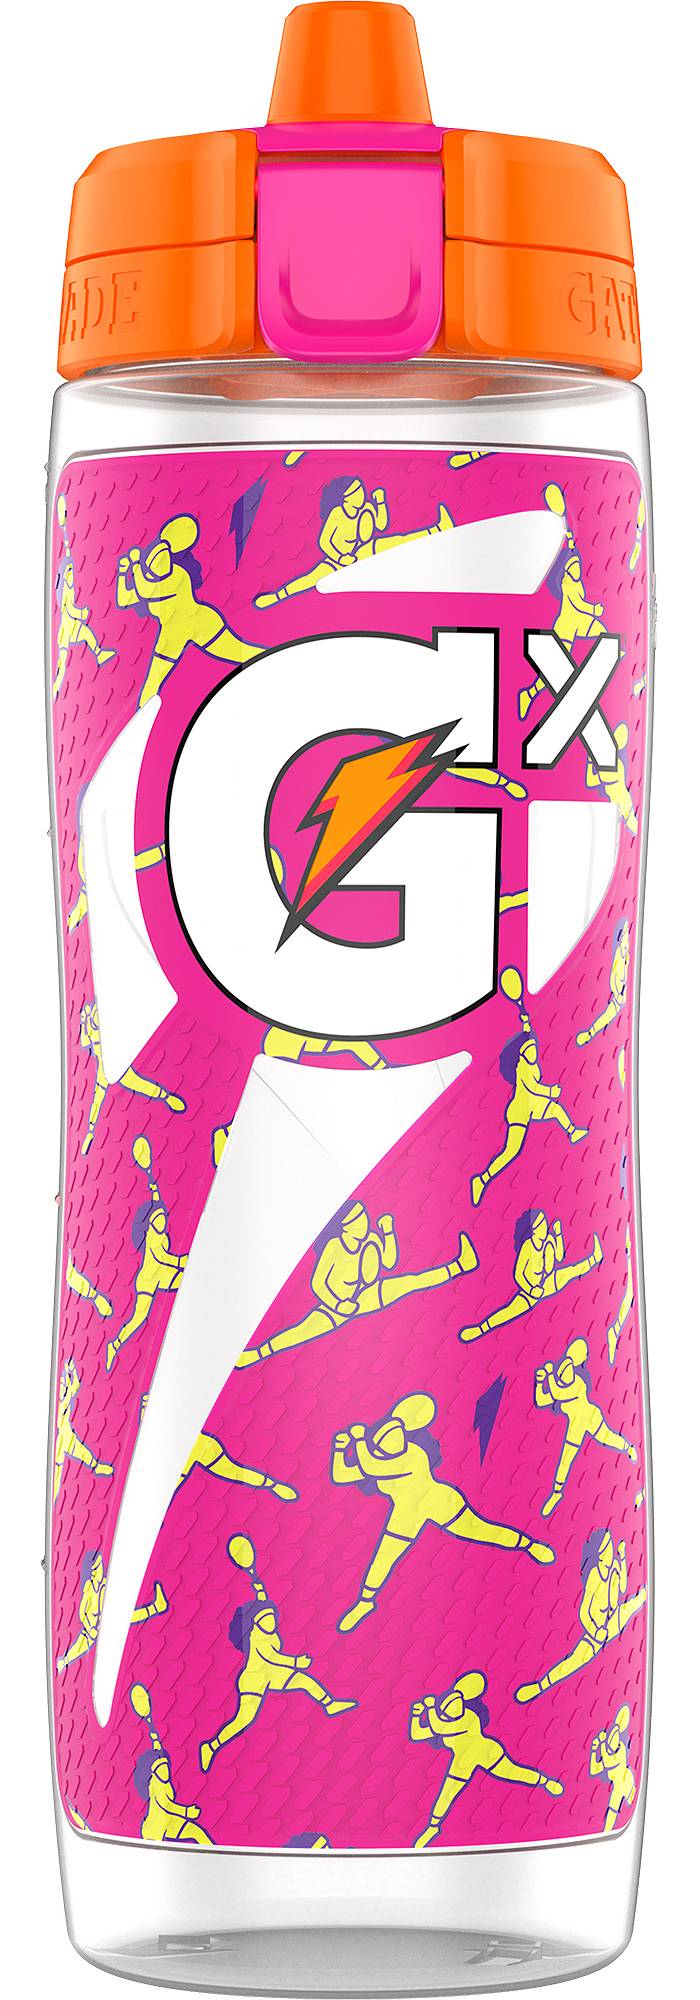 Gatorade GX 30 oz. Stainless Steel Bottle, Neon Yellow